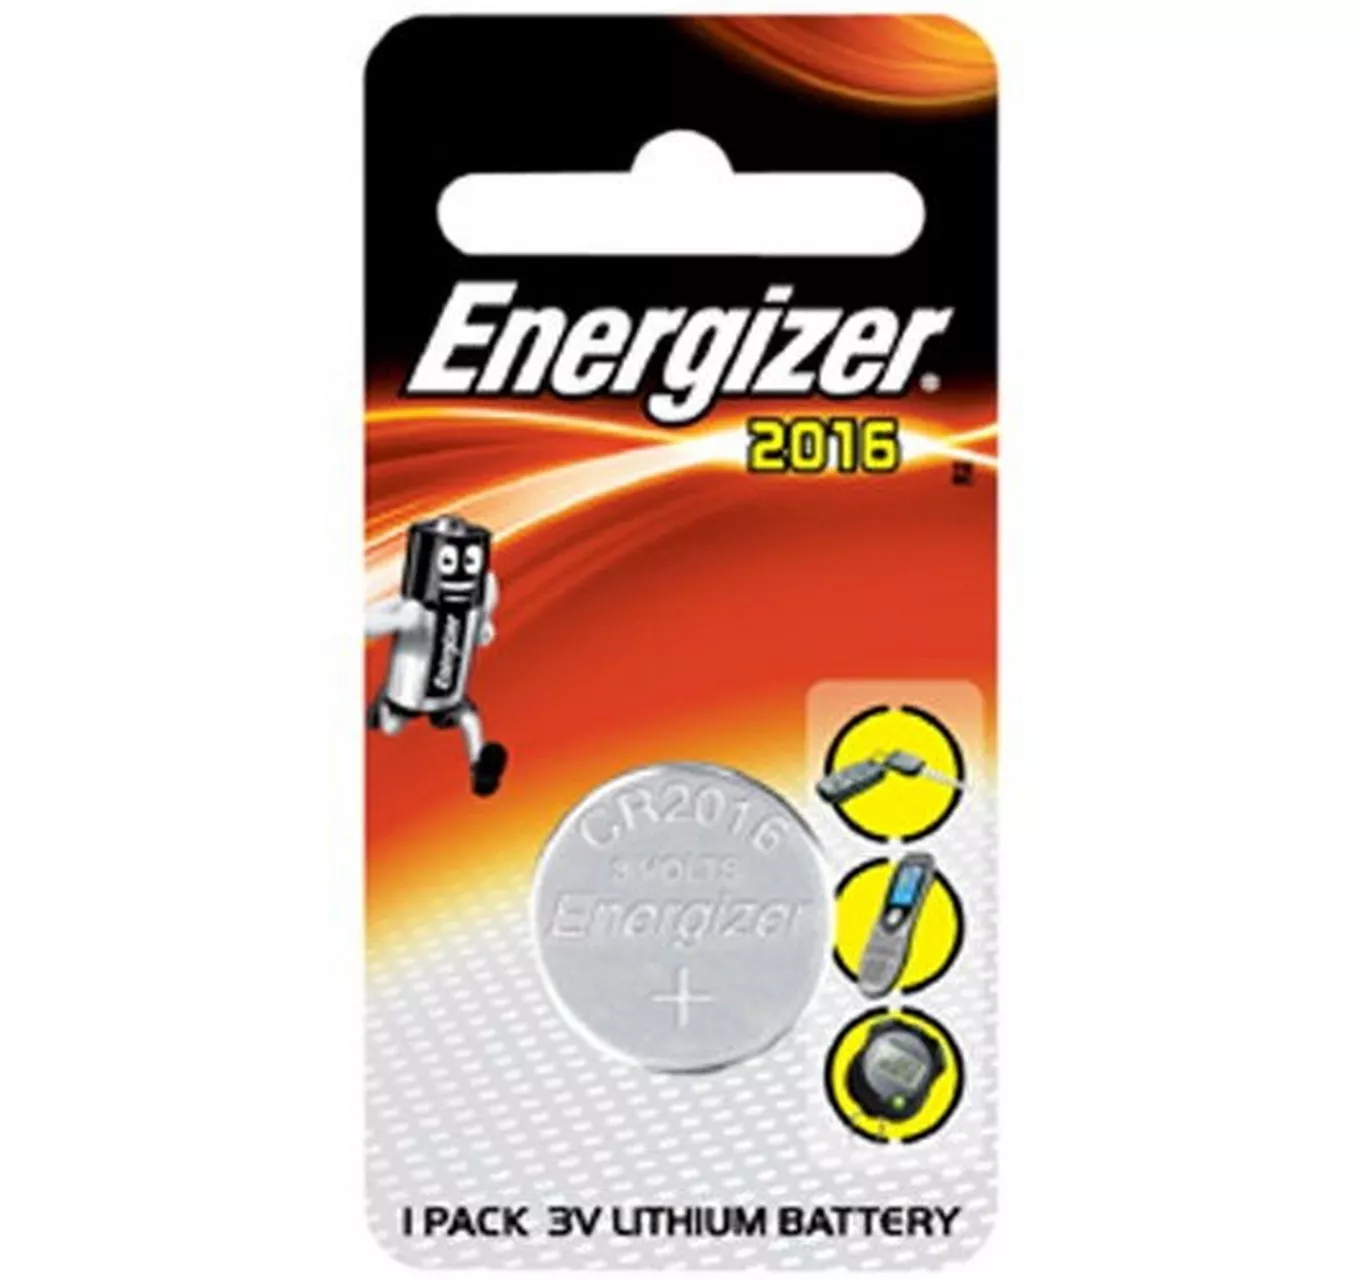 Energizer 2016 Lithium 3v